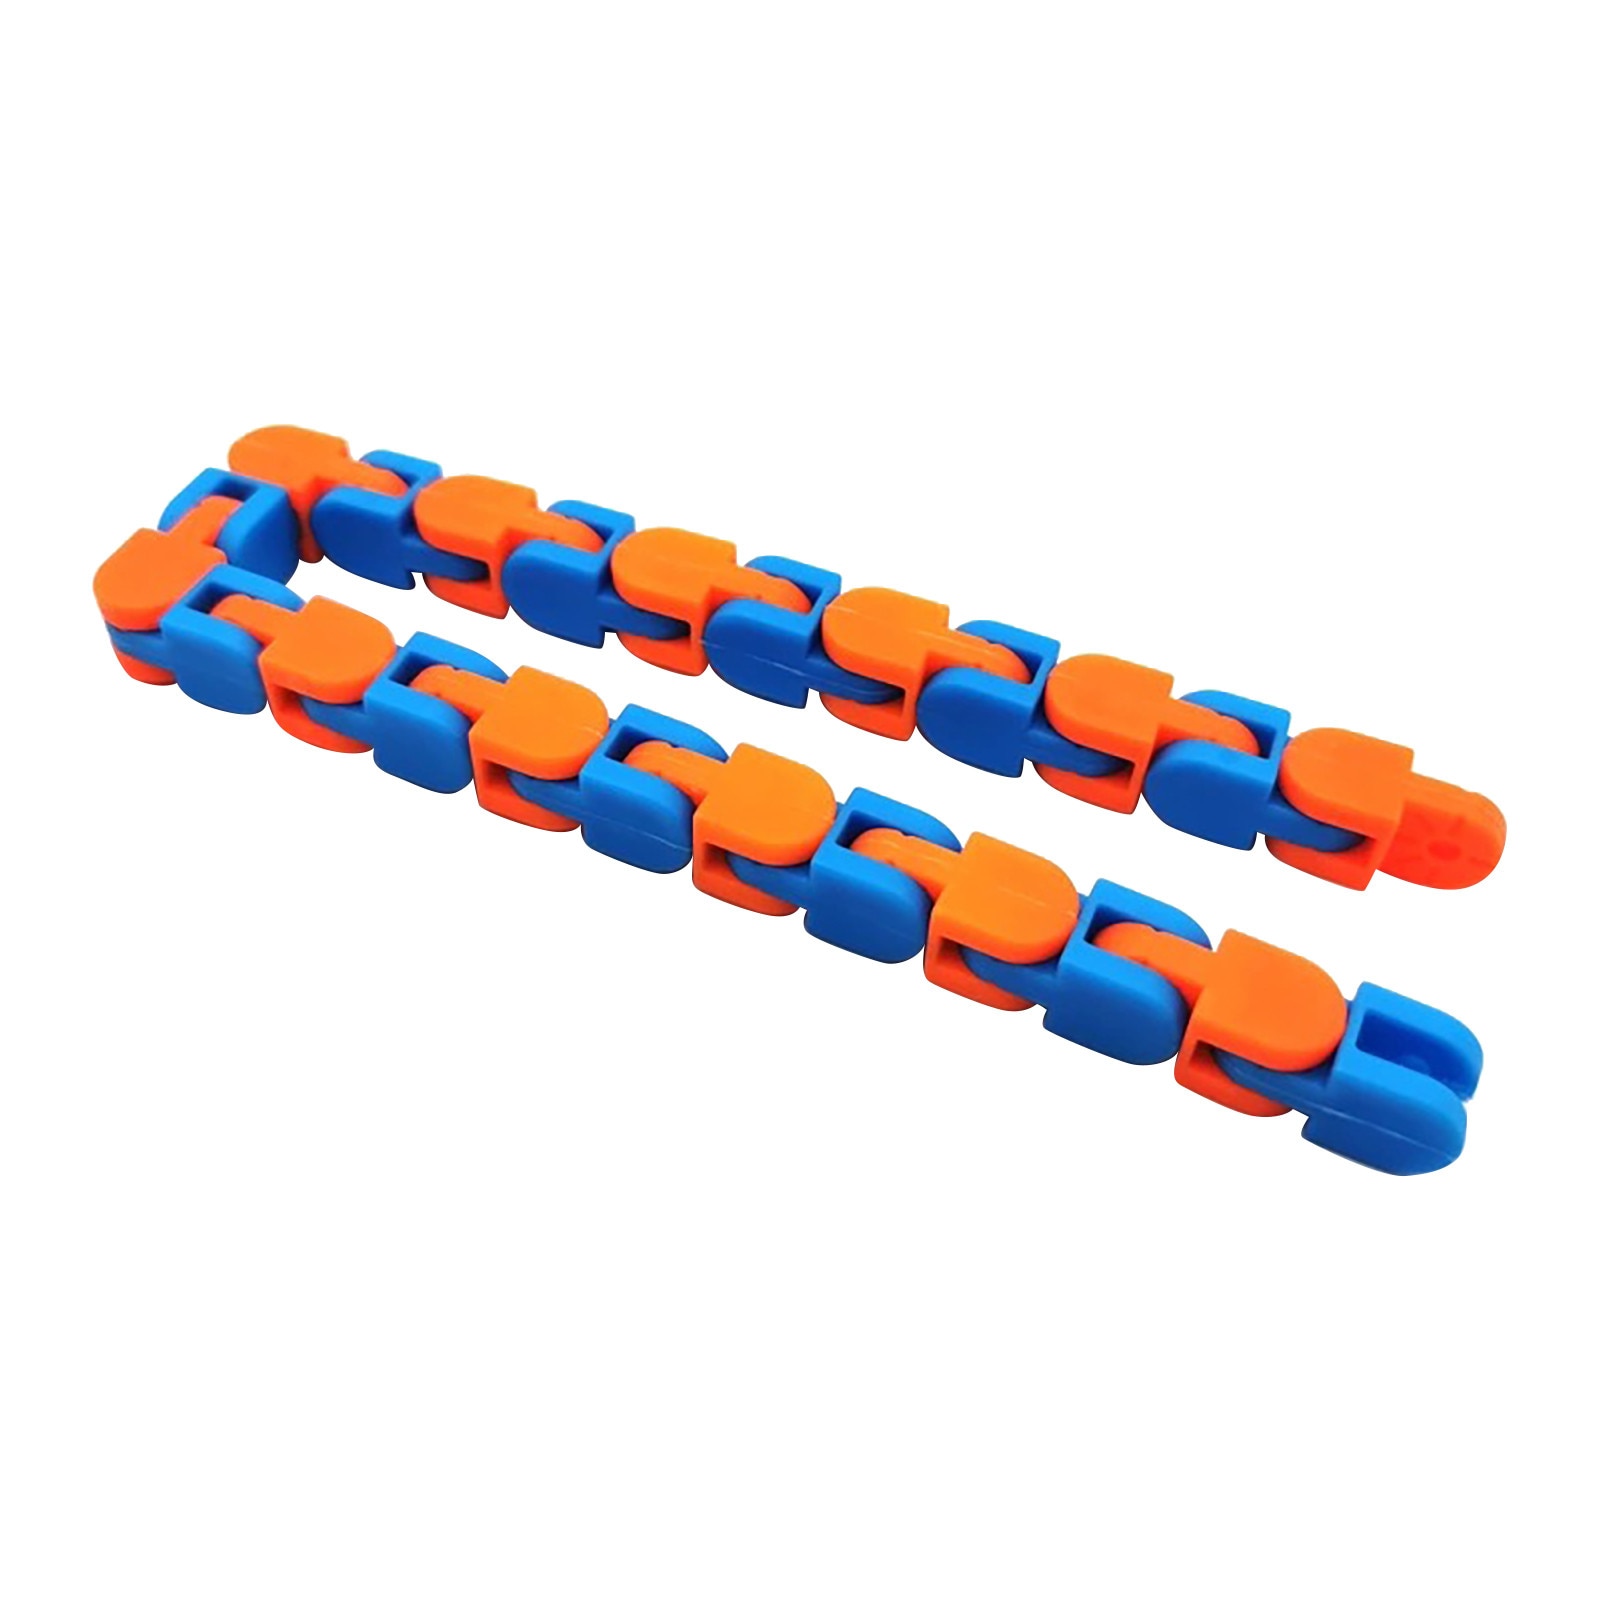 Toys Colorful Puzzle Sensory Tracks Snap And Click Fidget Toys Kids Fidget Toys Stress Relief Rotate - Simple Dimple Fidget